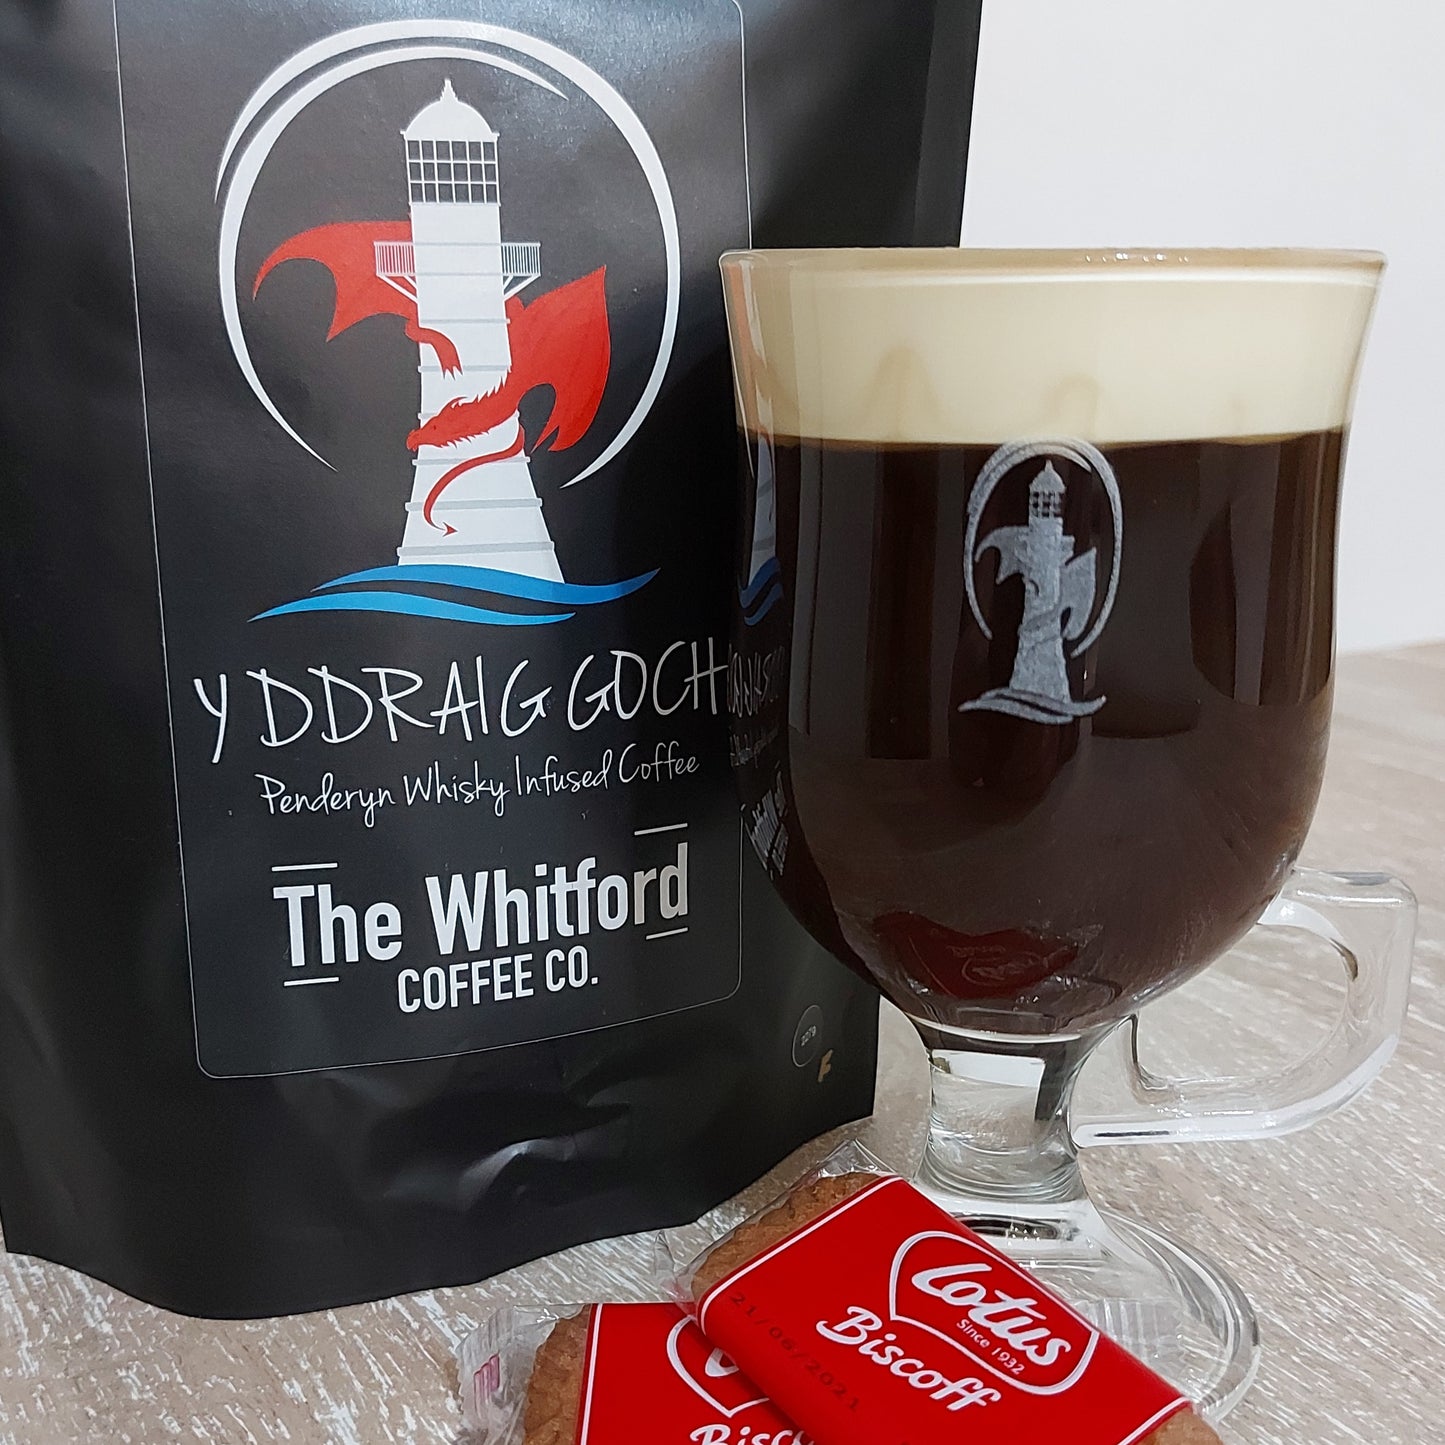 Limited Edition Ddraig Goch Penderyn Whisky Infused Coffee Gift Set